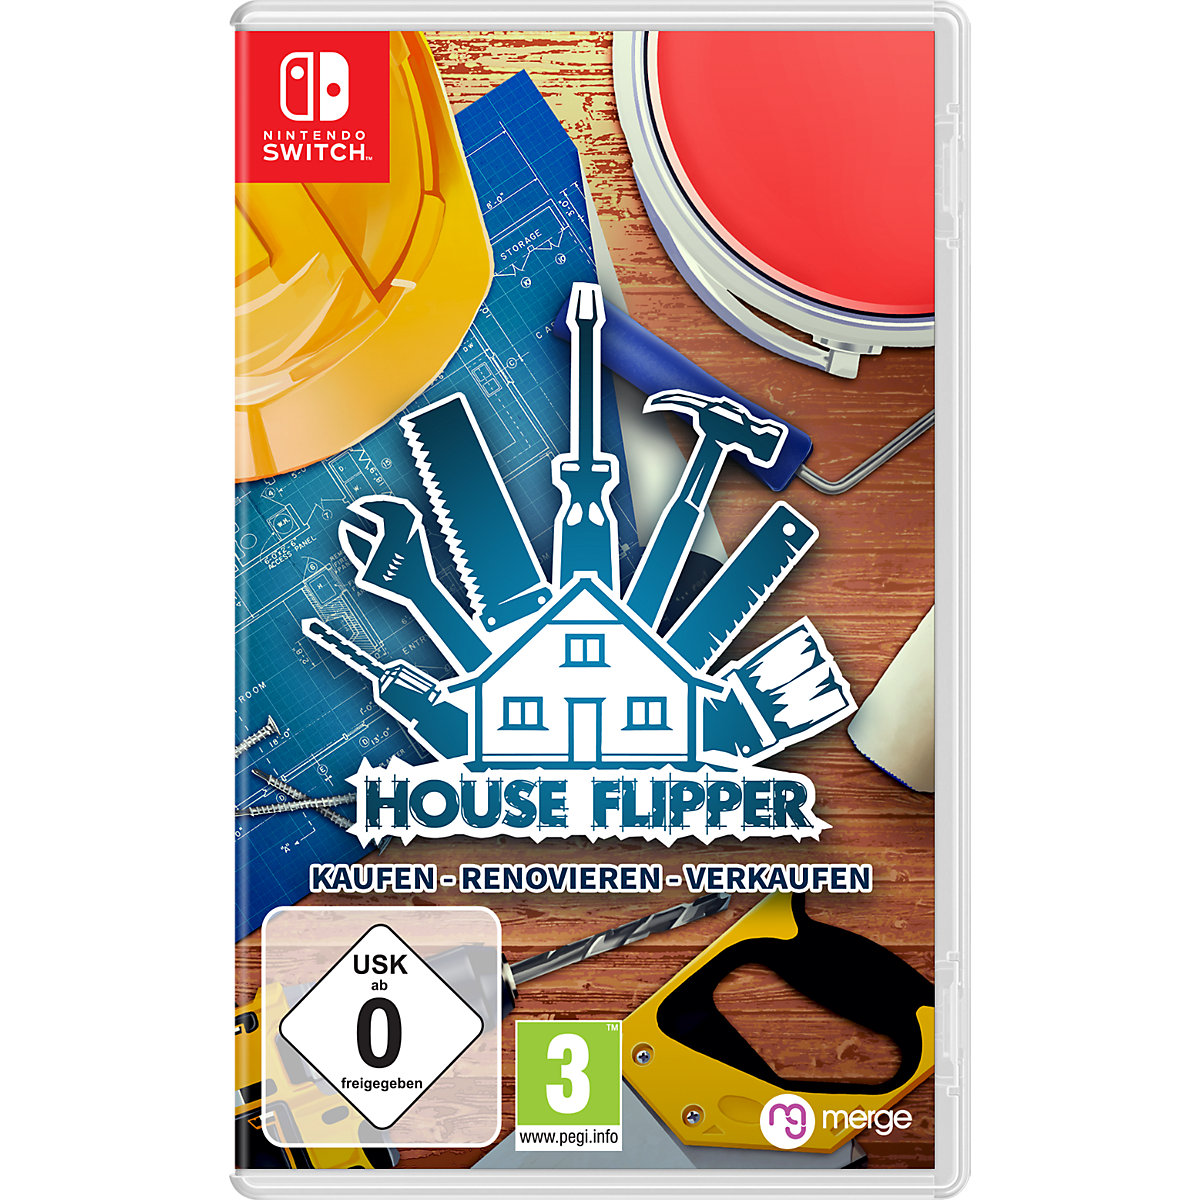 Nintendo Switch House Flipper